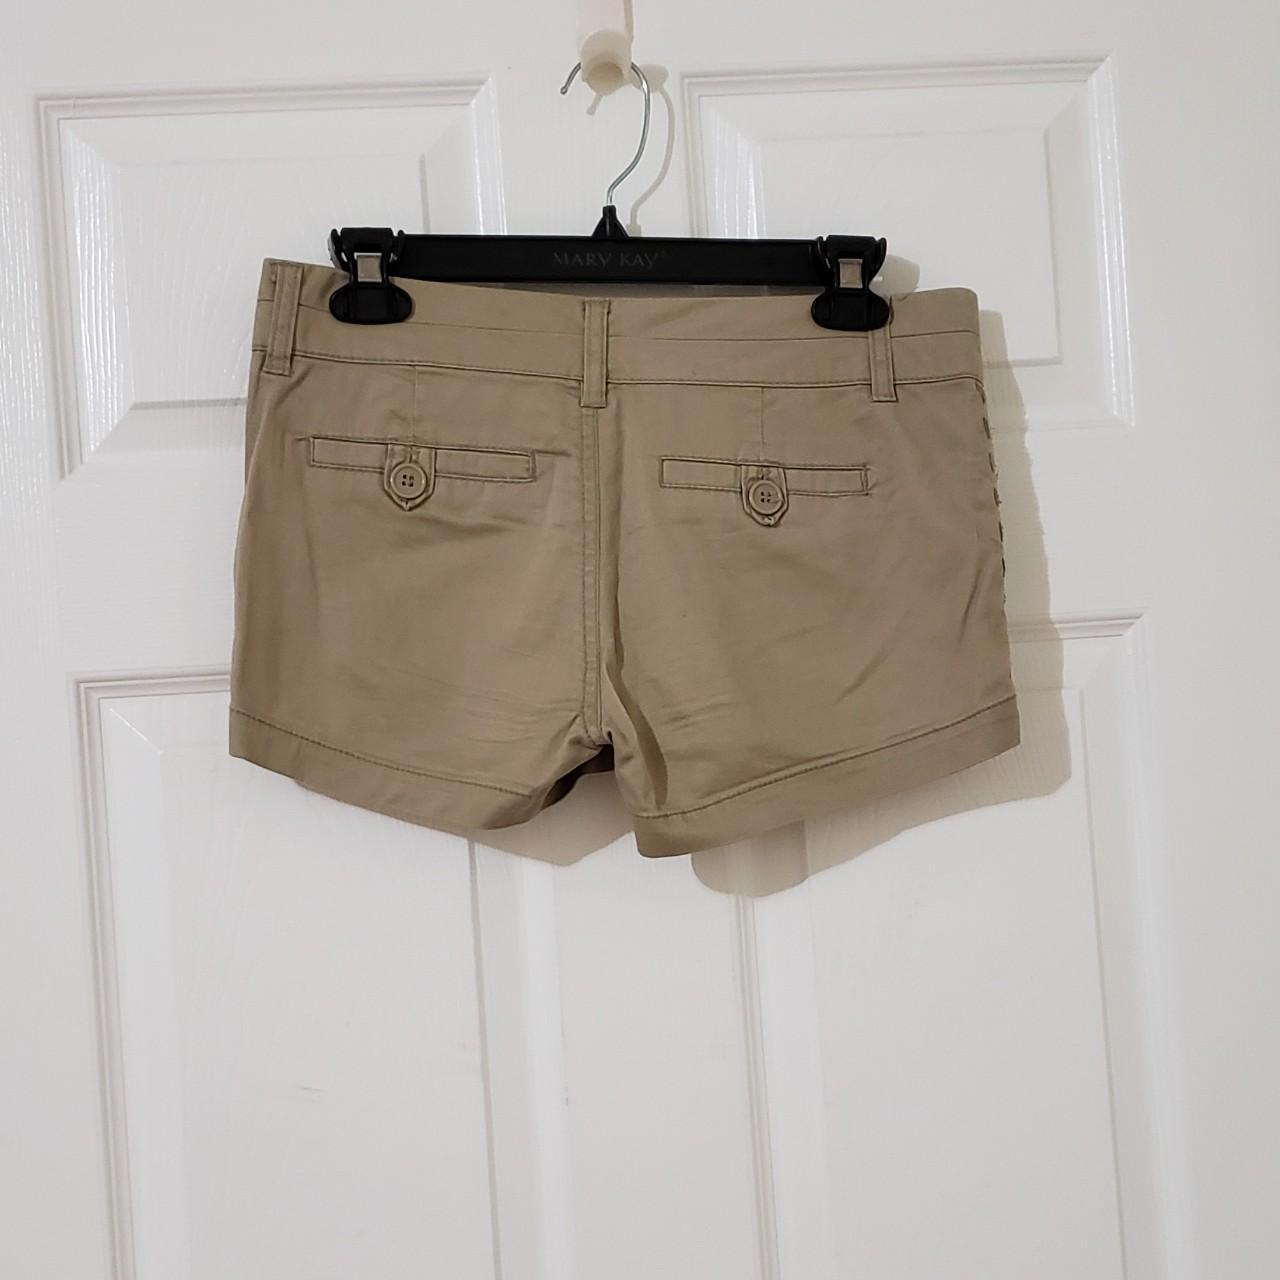 FreeStyle Revolution Khaki shorts Size 3 waist... - Depop